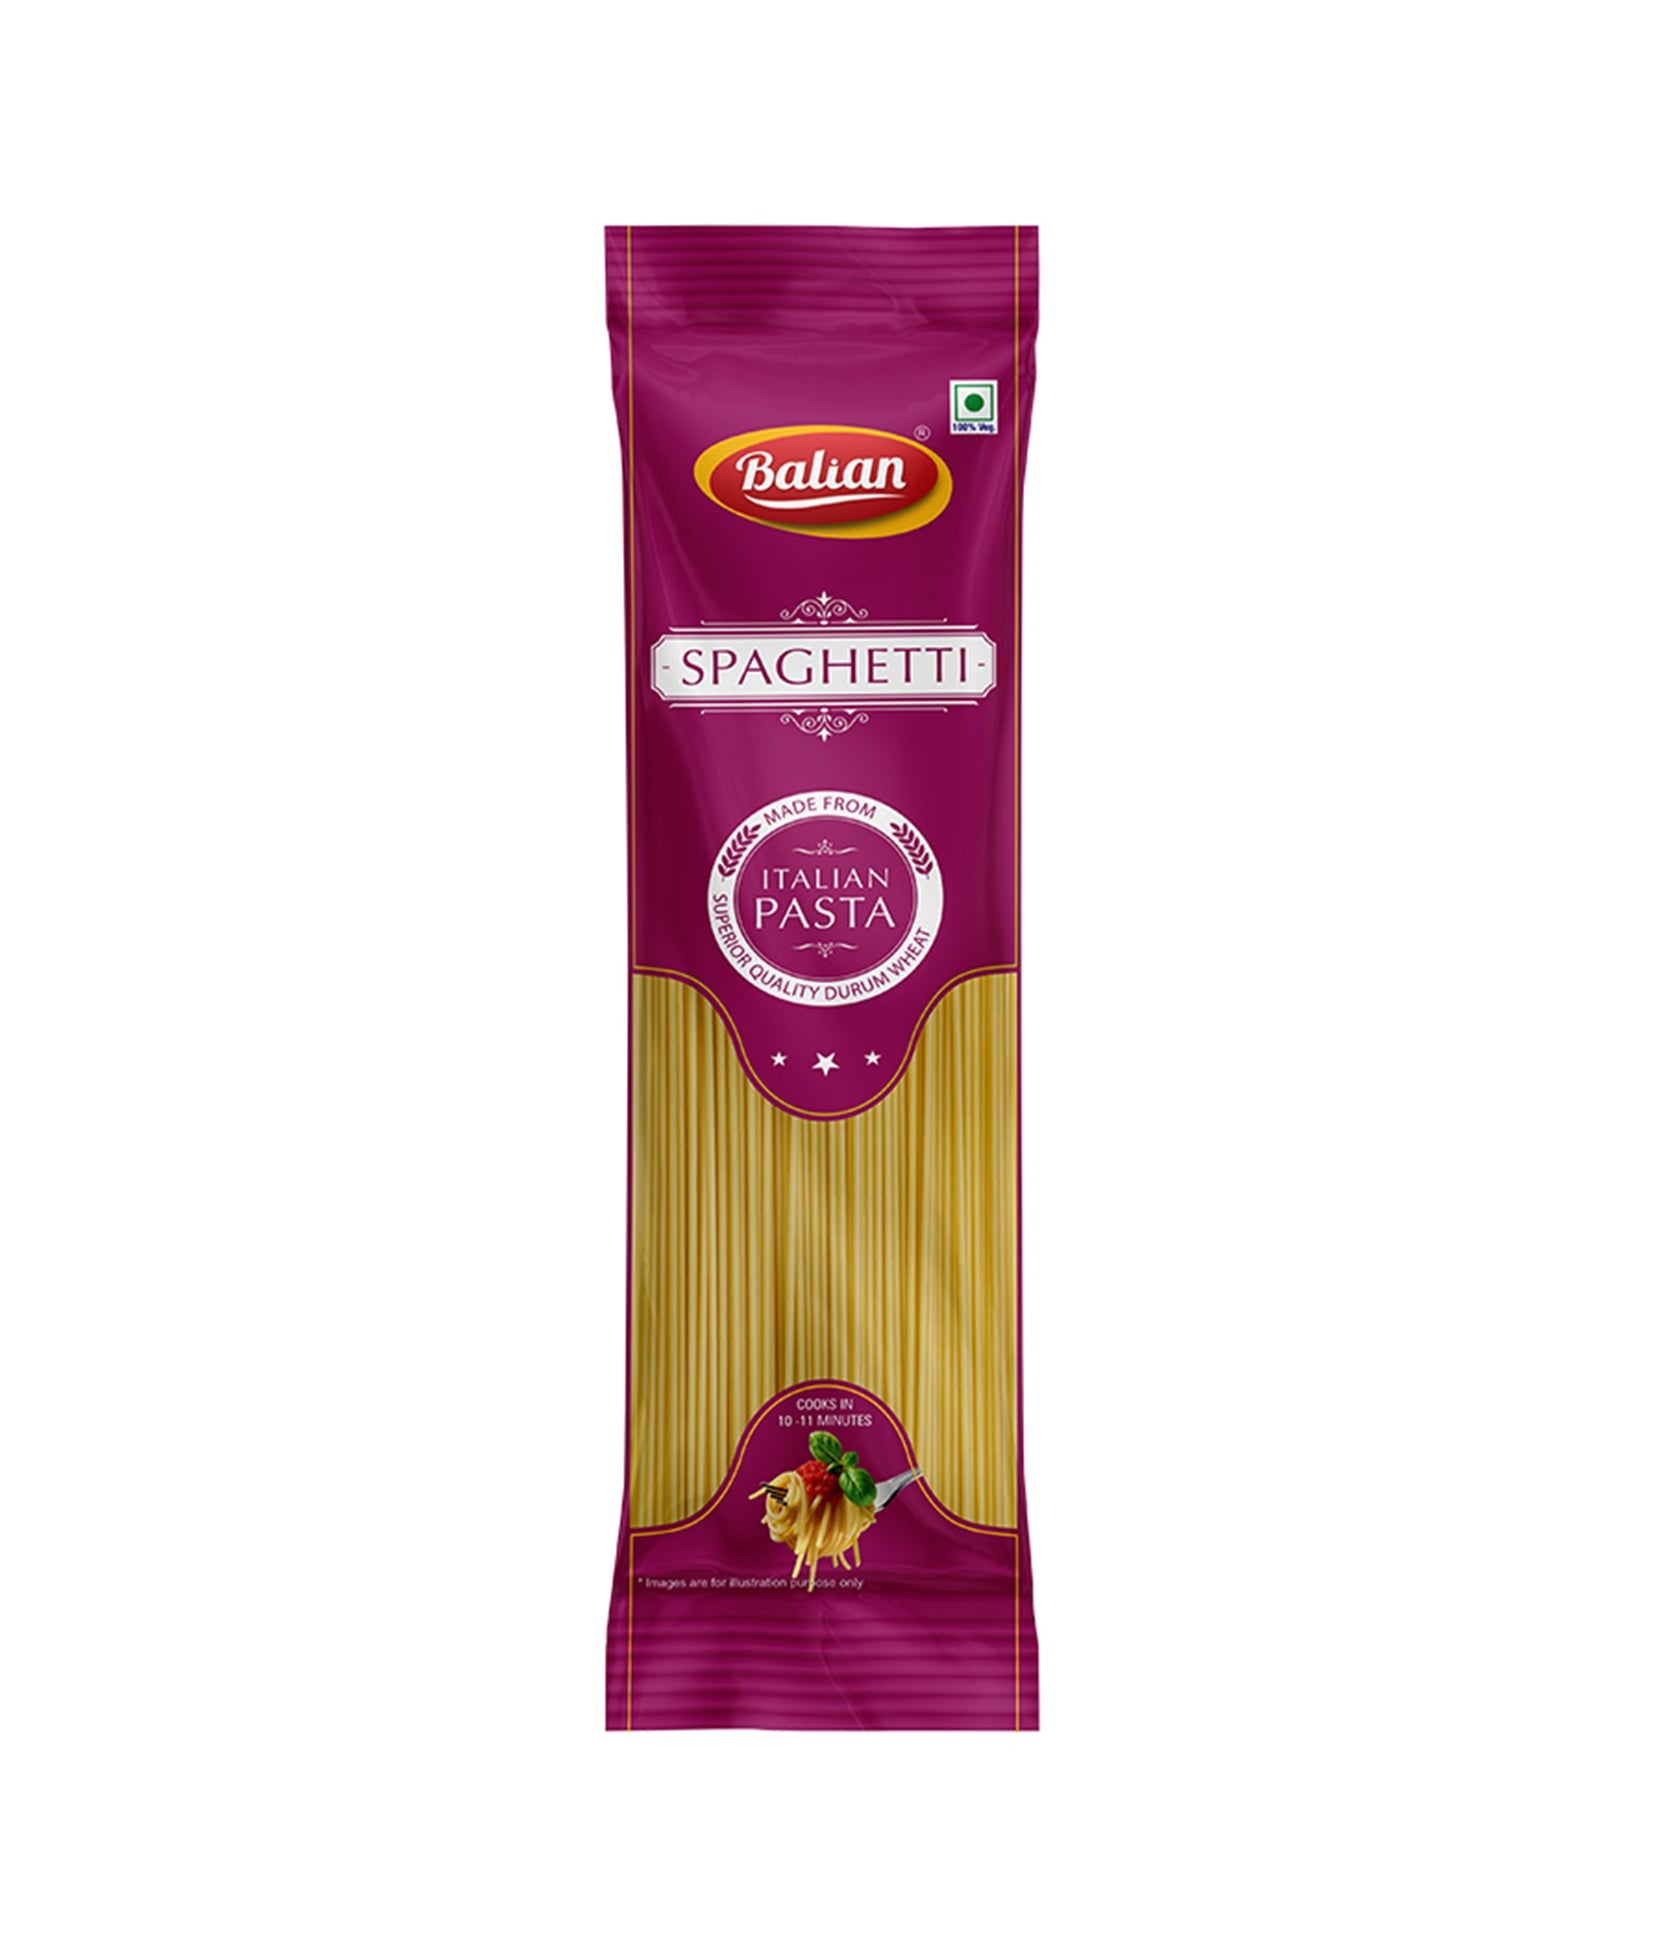 Balian Spaghetti Italian Pasta - Bambino Pasta